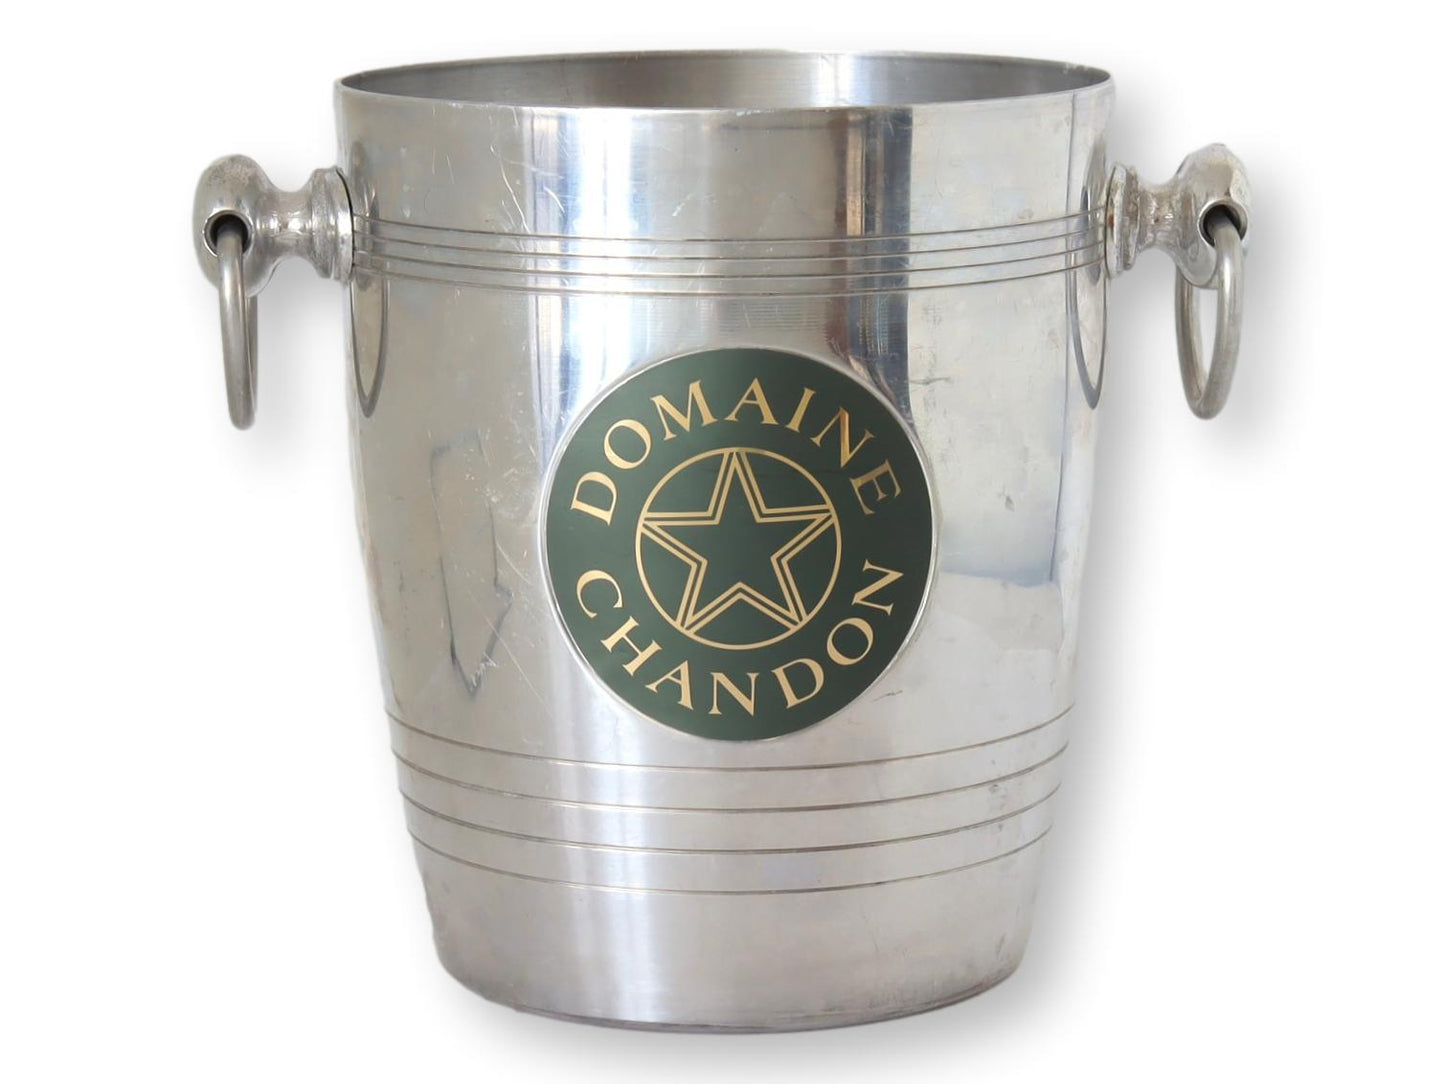 Vintage Domain Chandon Champagne Bucket